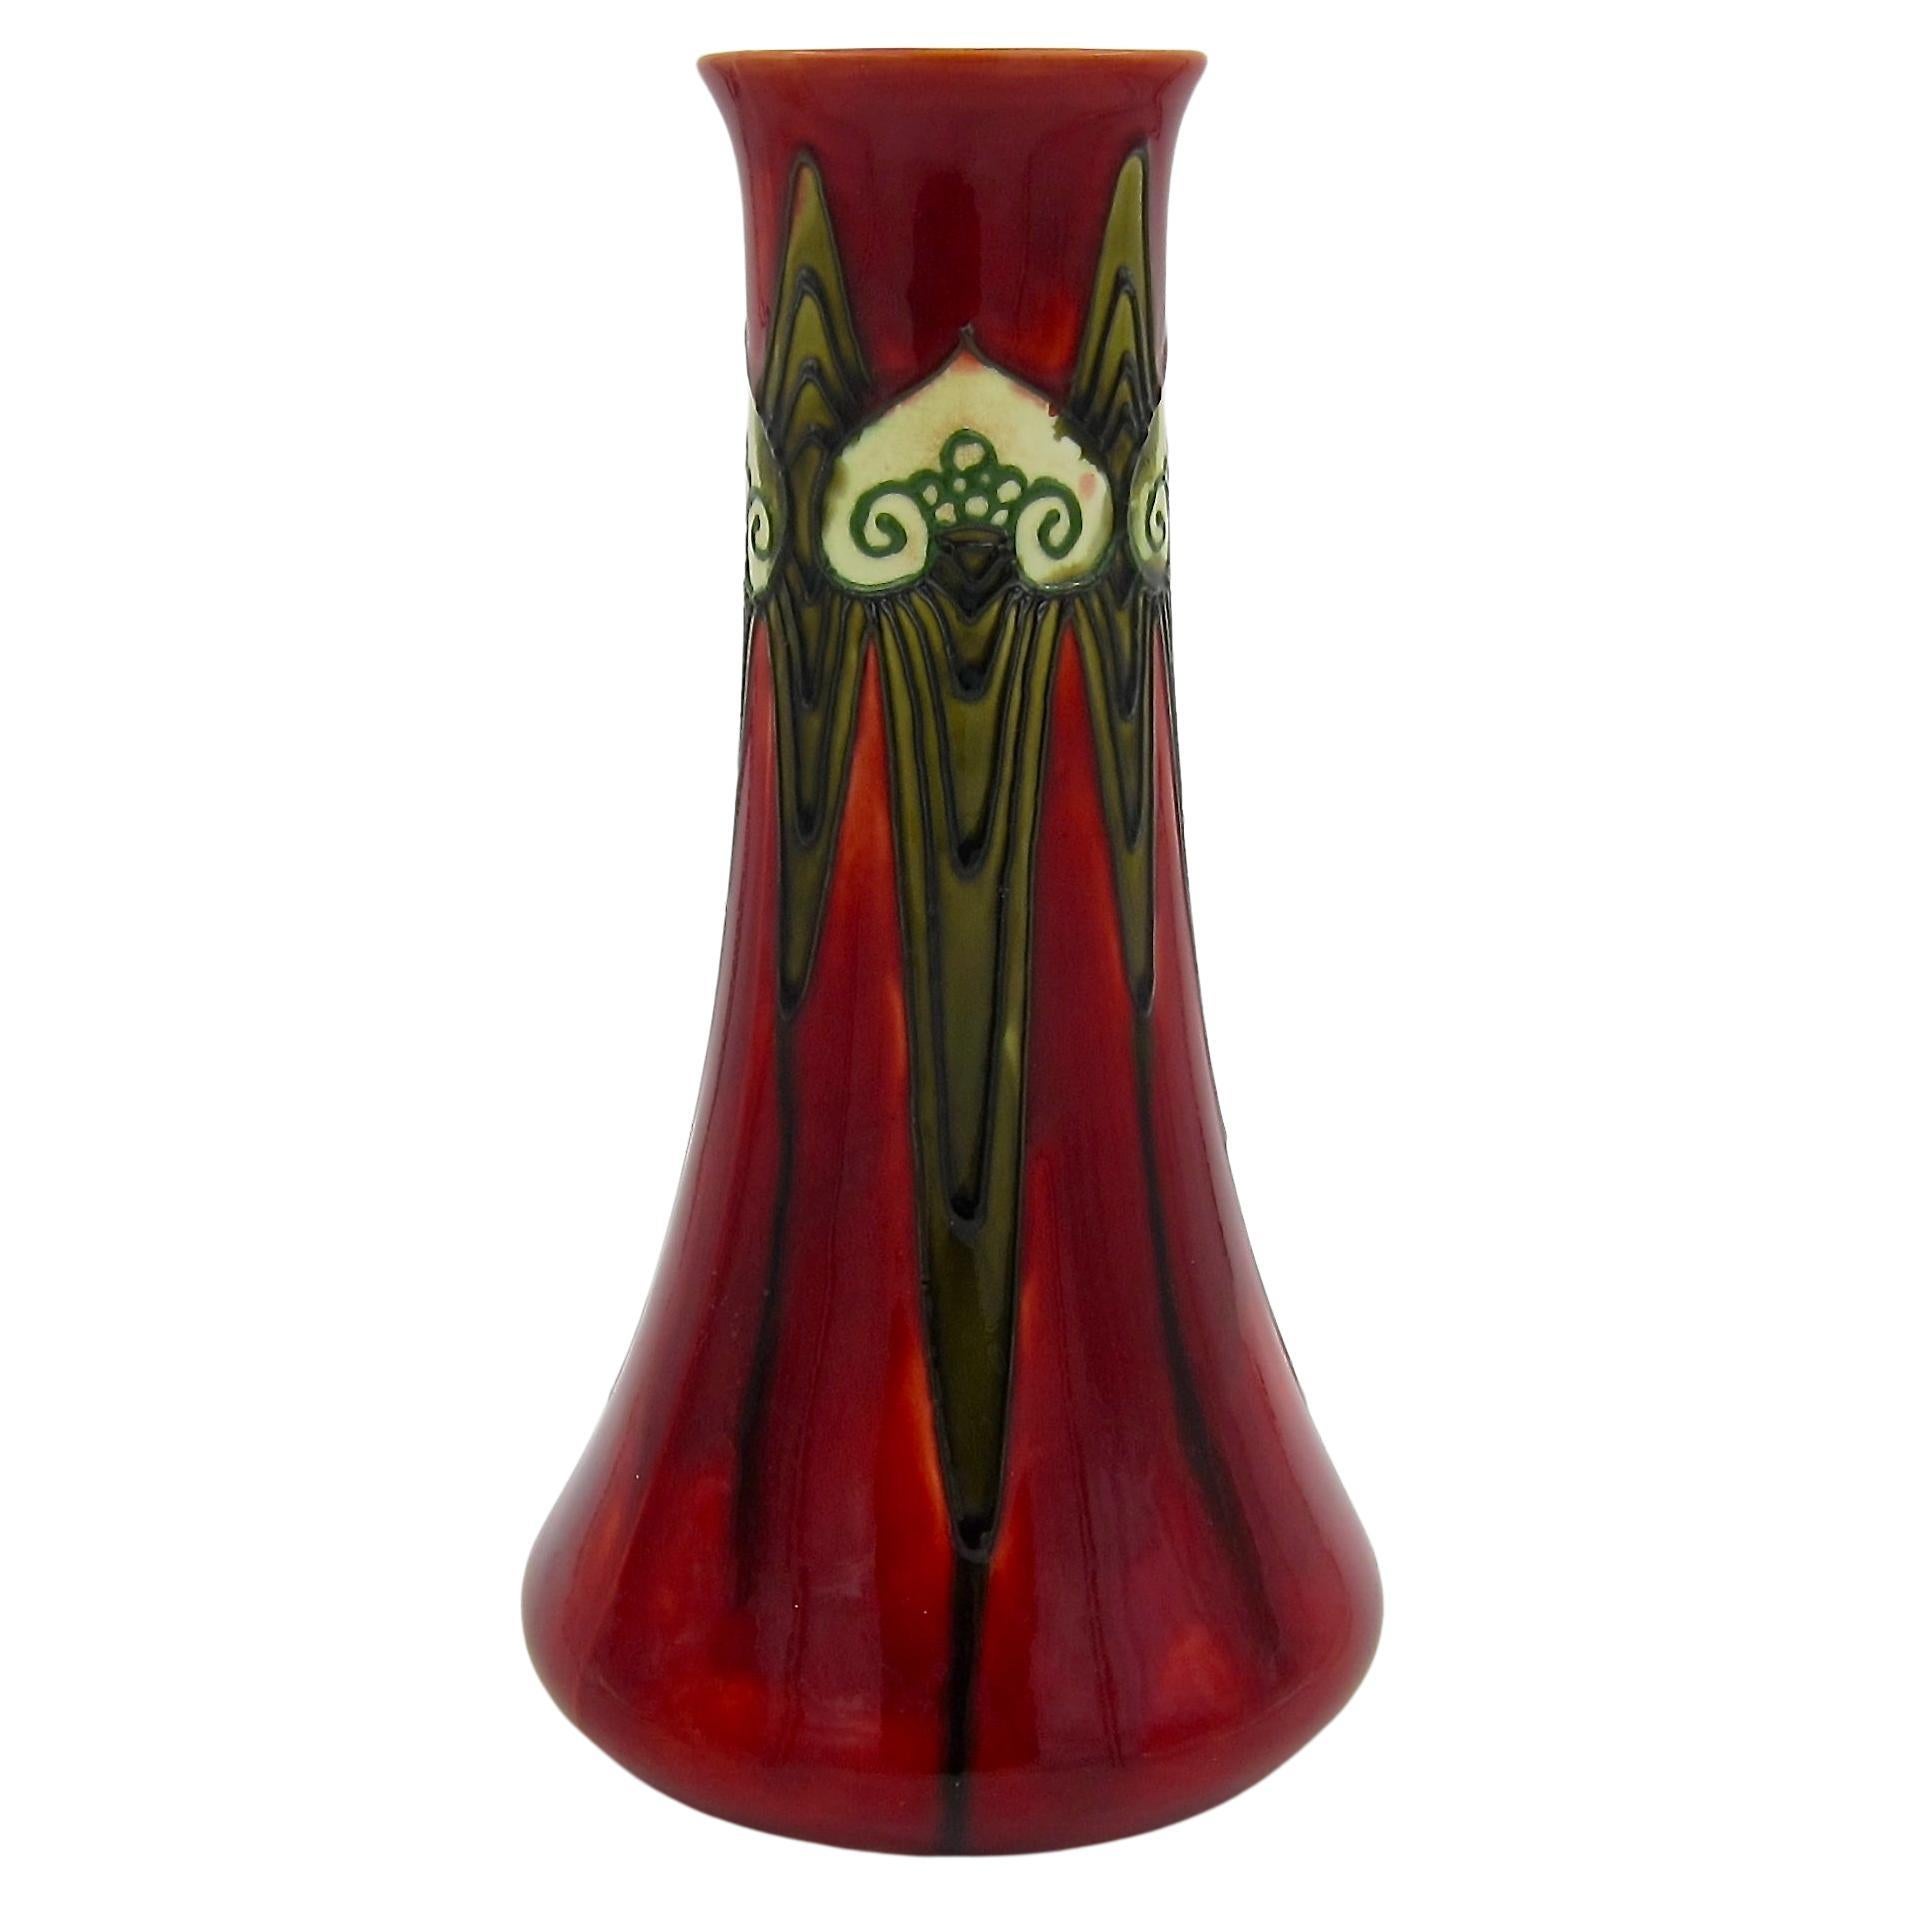 English Minton Secessionist Ware Art Nouveau Vase No. 1, circa 1910